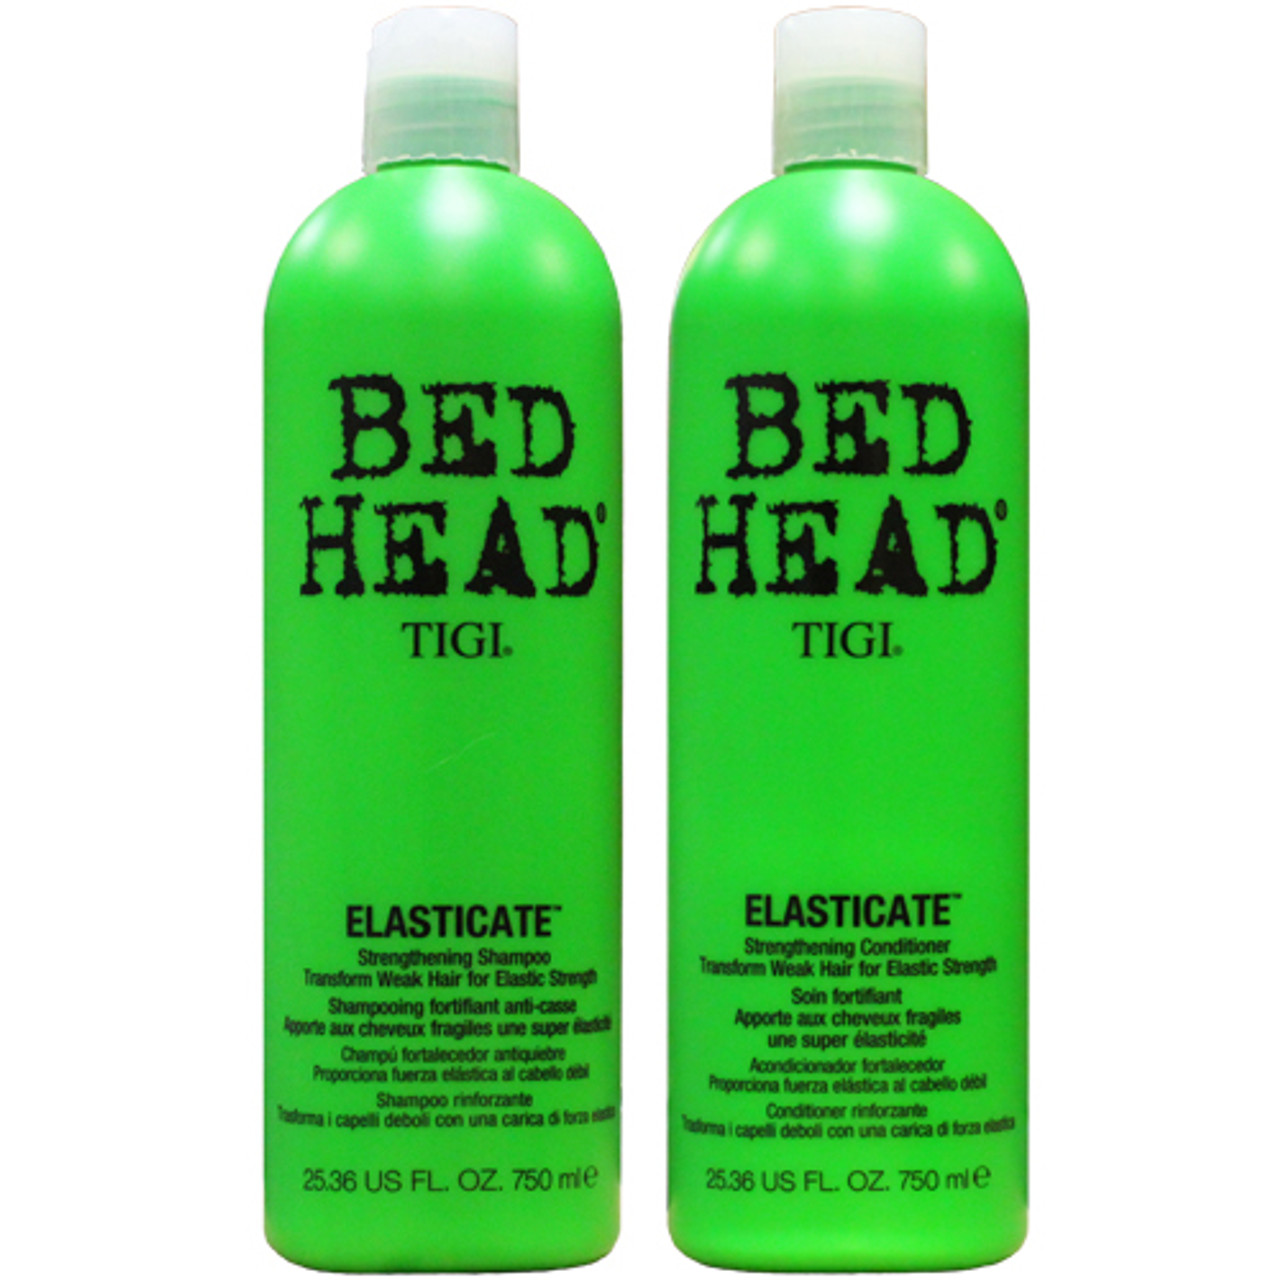 Bed Head Elasticate Shampoo & Conditioner